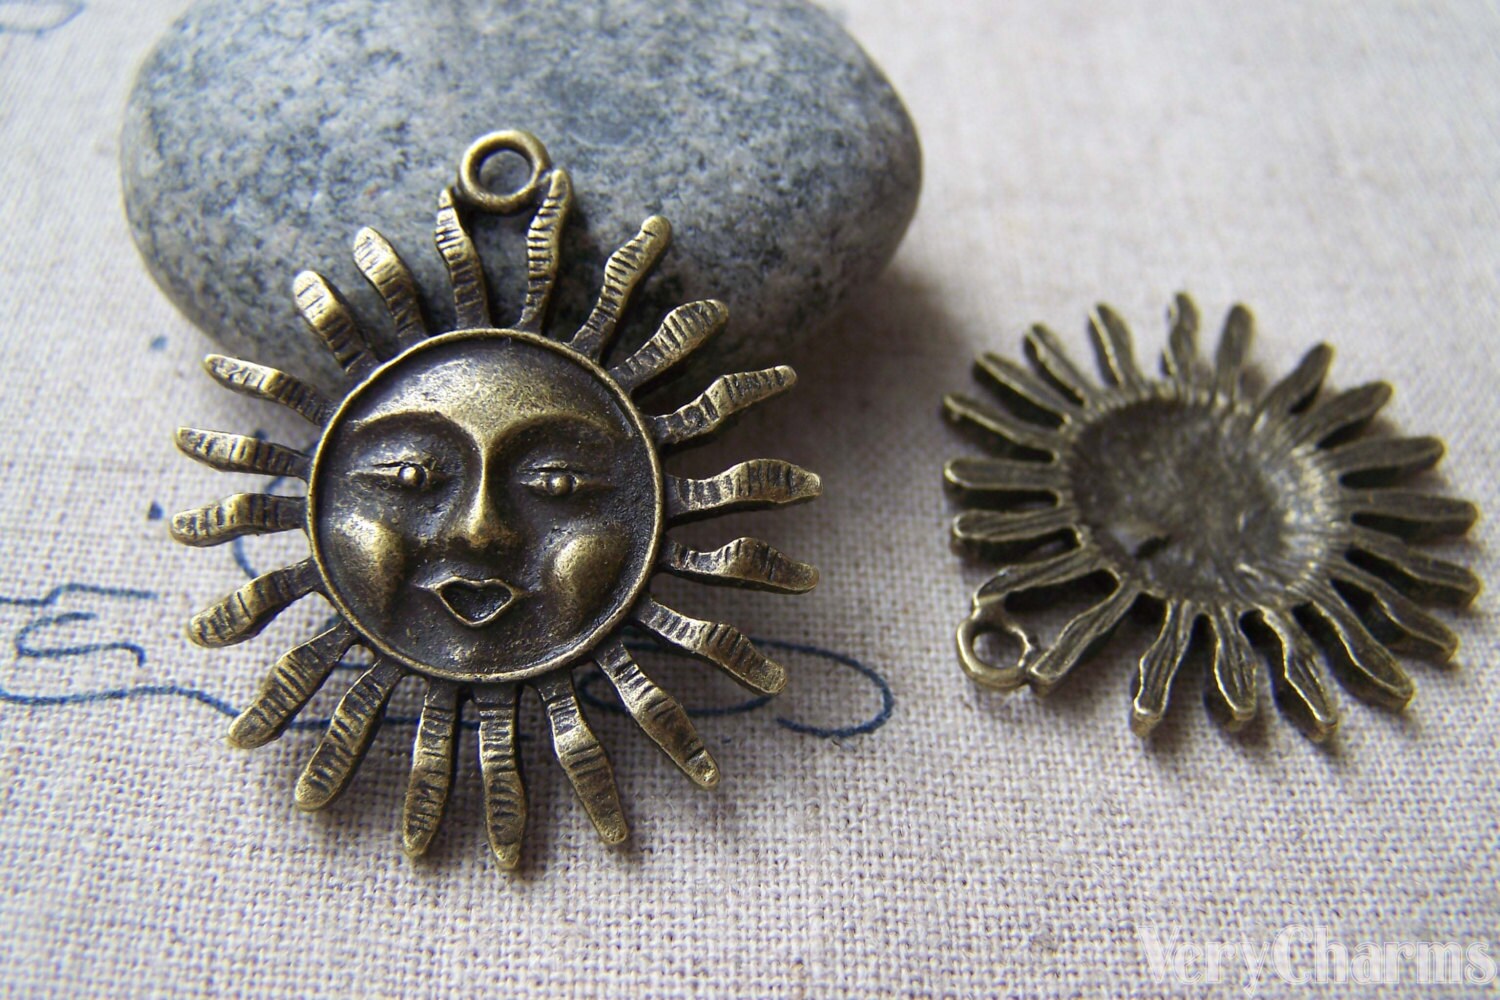 10Pcs Sun Charms Silver Gold Bronze Color Antique Nature Pendants Vintage  Metal Charms For Jewelry Making Findings DIY Bracelets